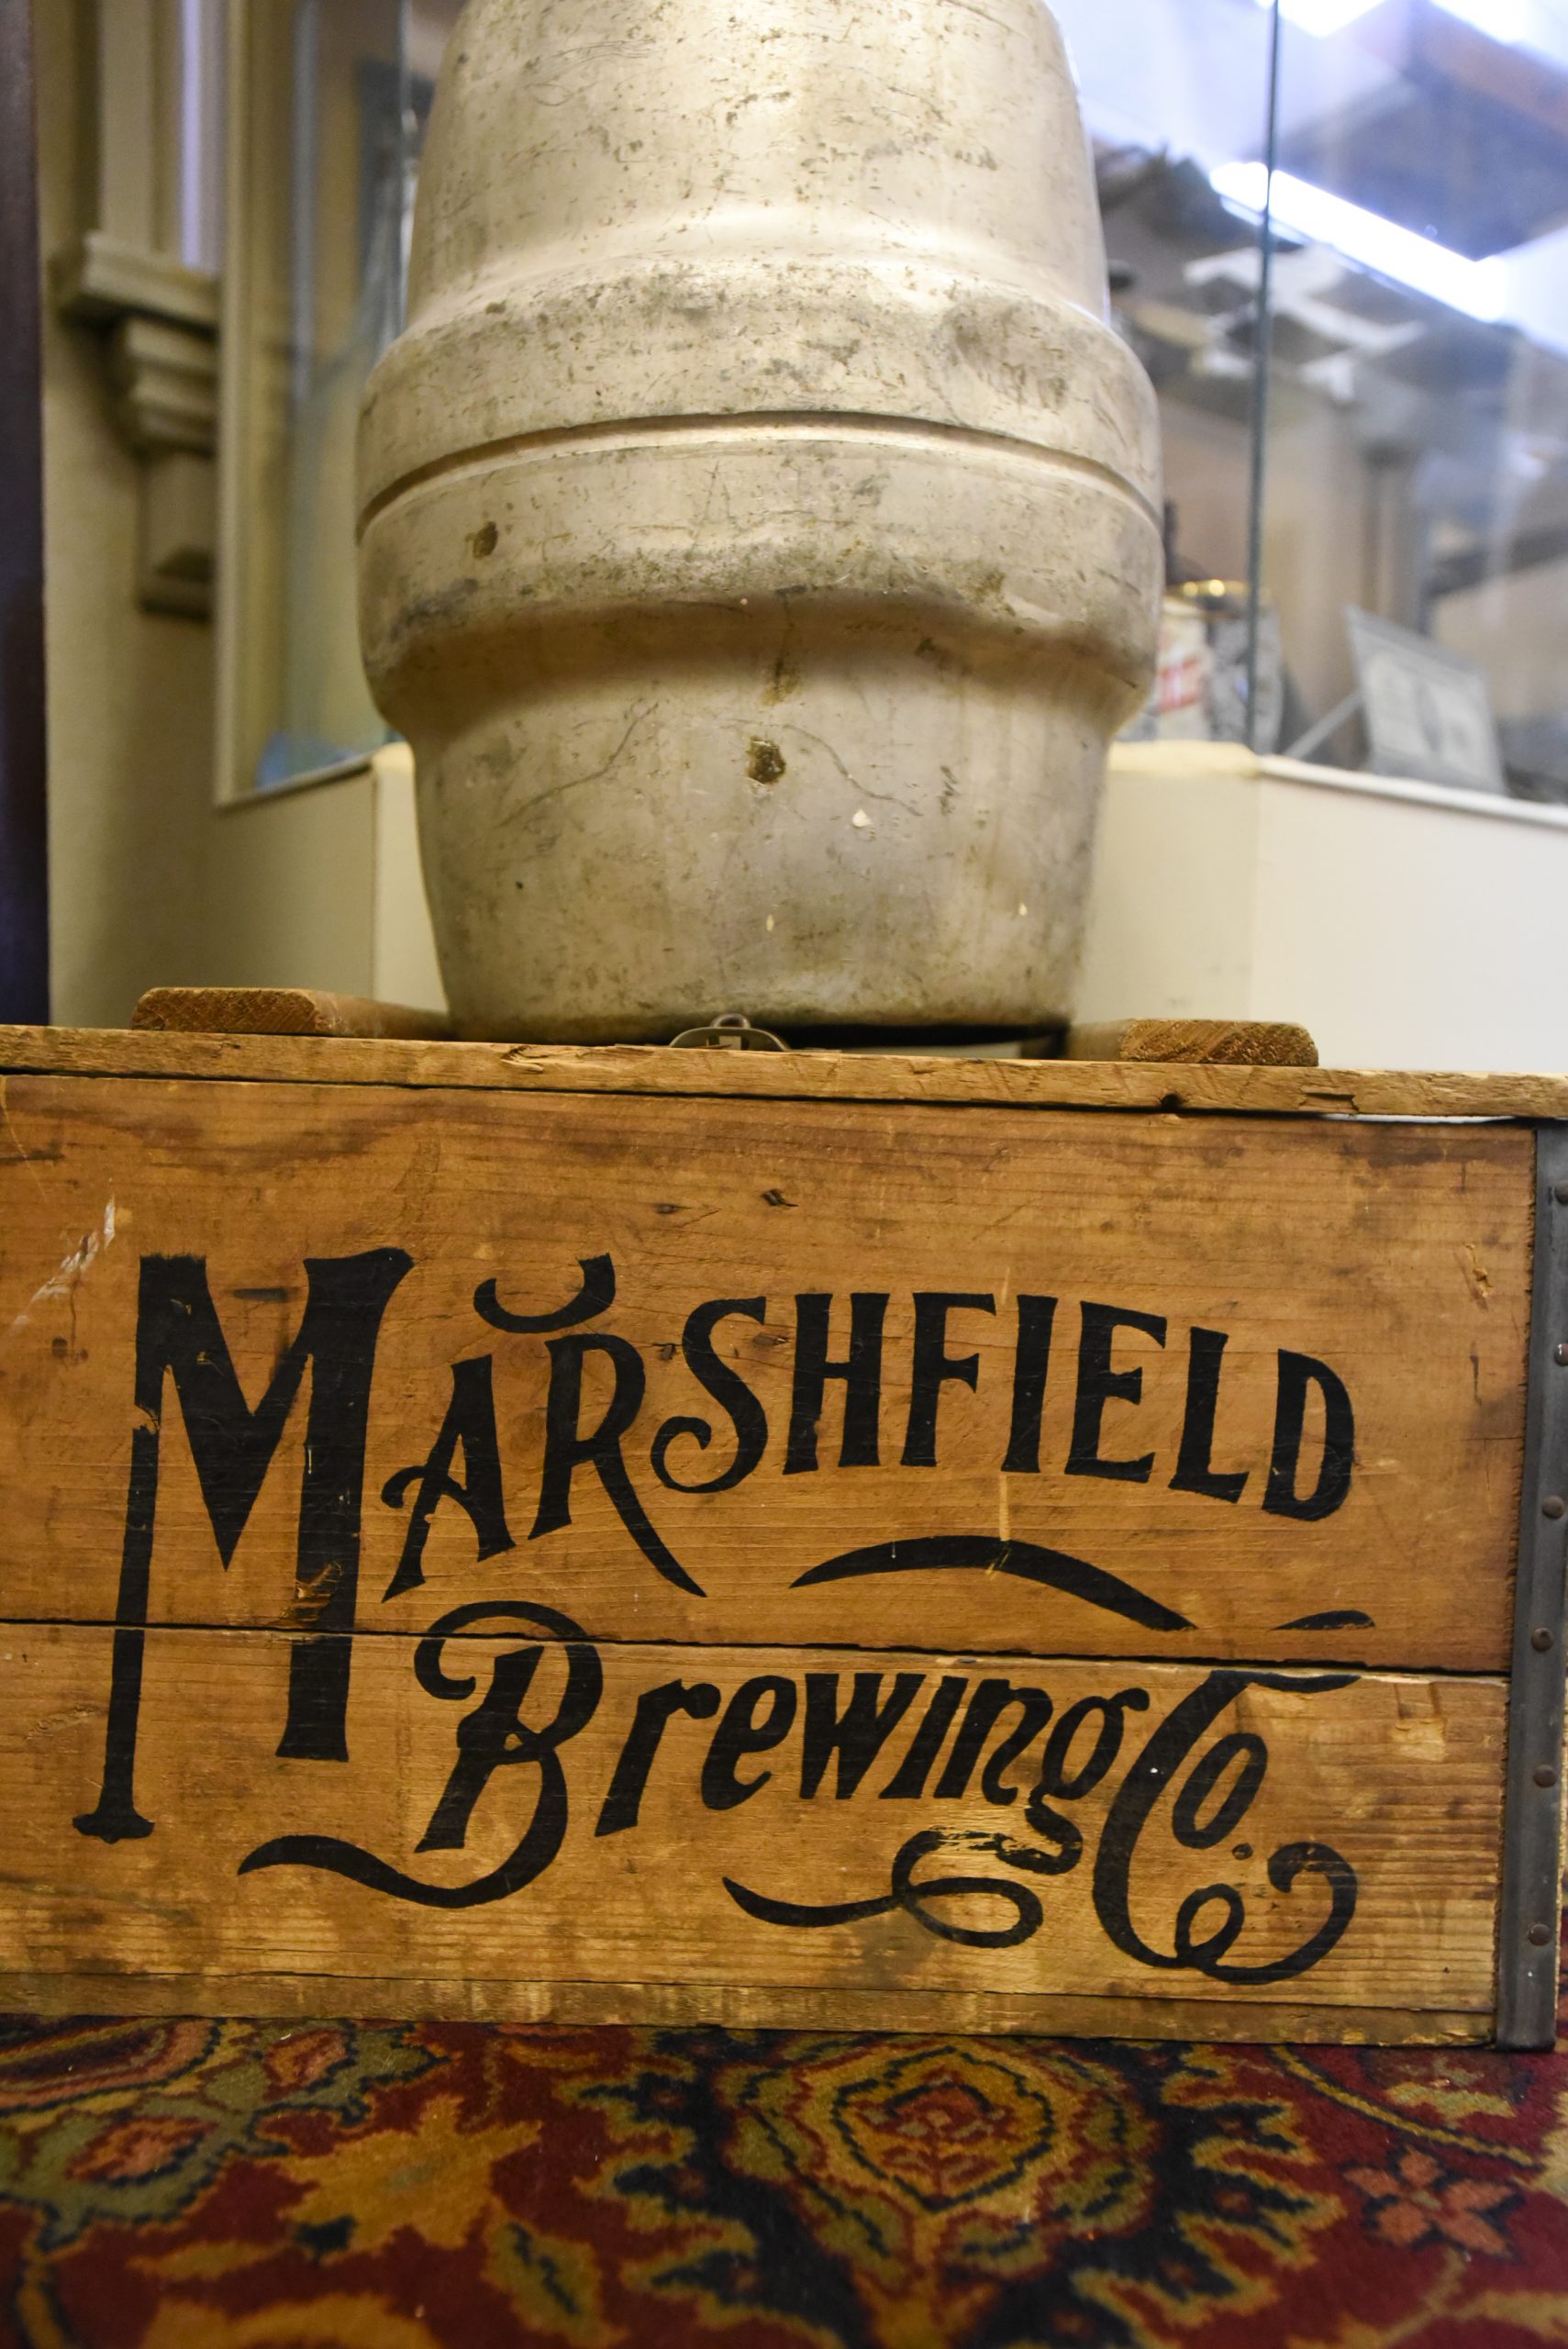 Marshfield Brewery crate